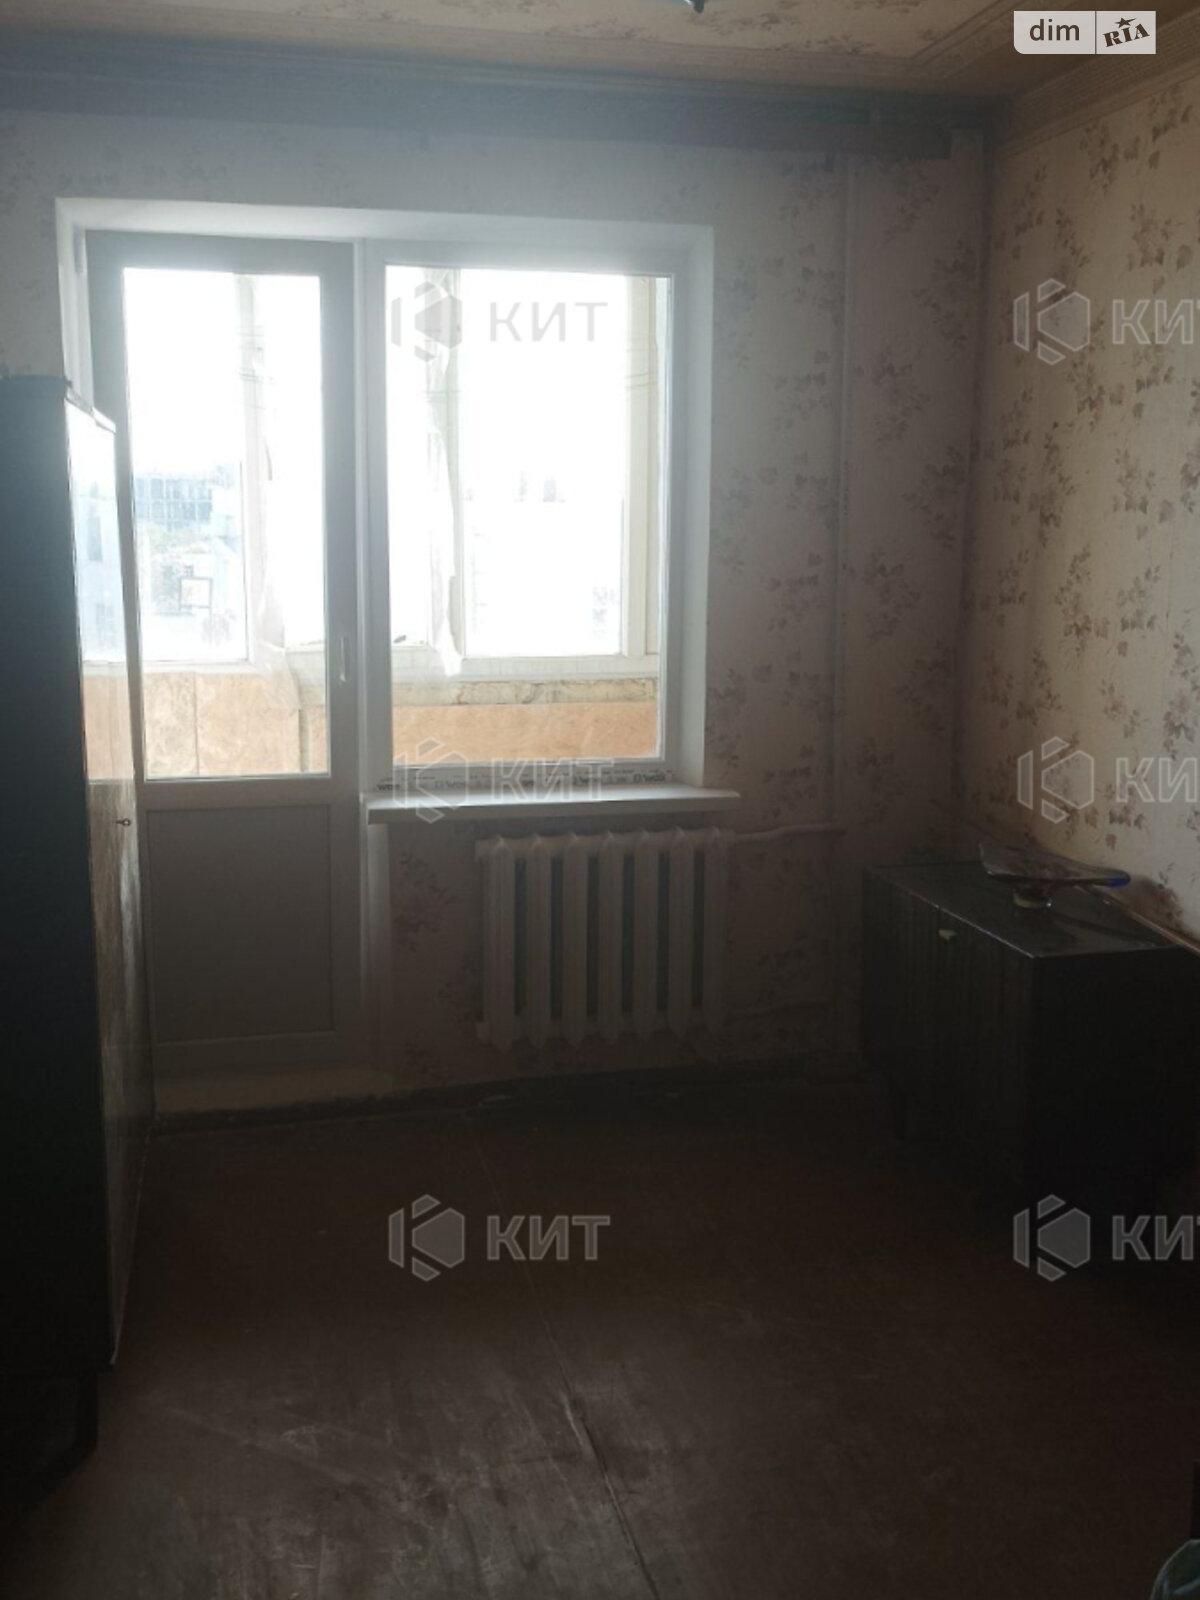 Продажа трехкомнатной квартиры в Харькове, на просп. Гагарина 94, район Центр фото 1